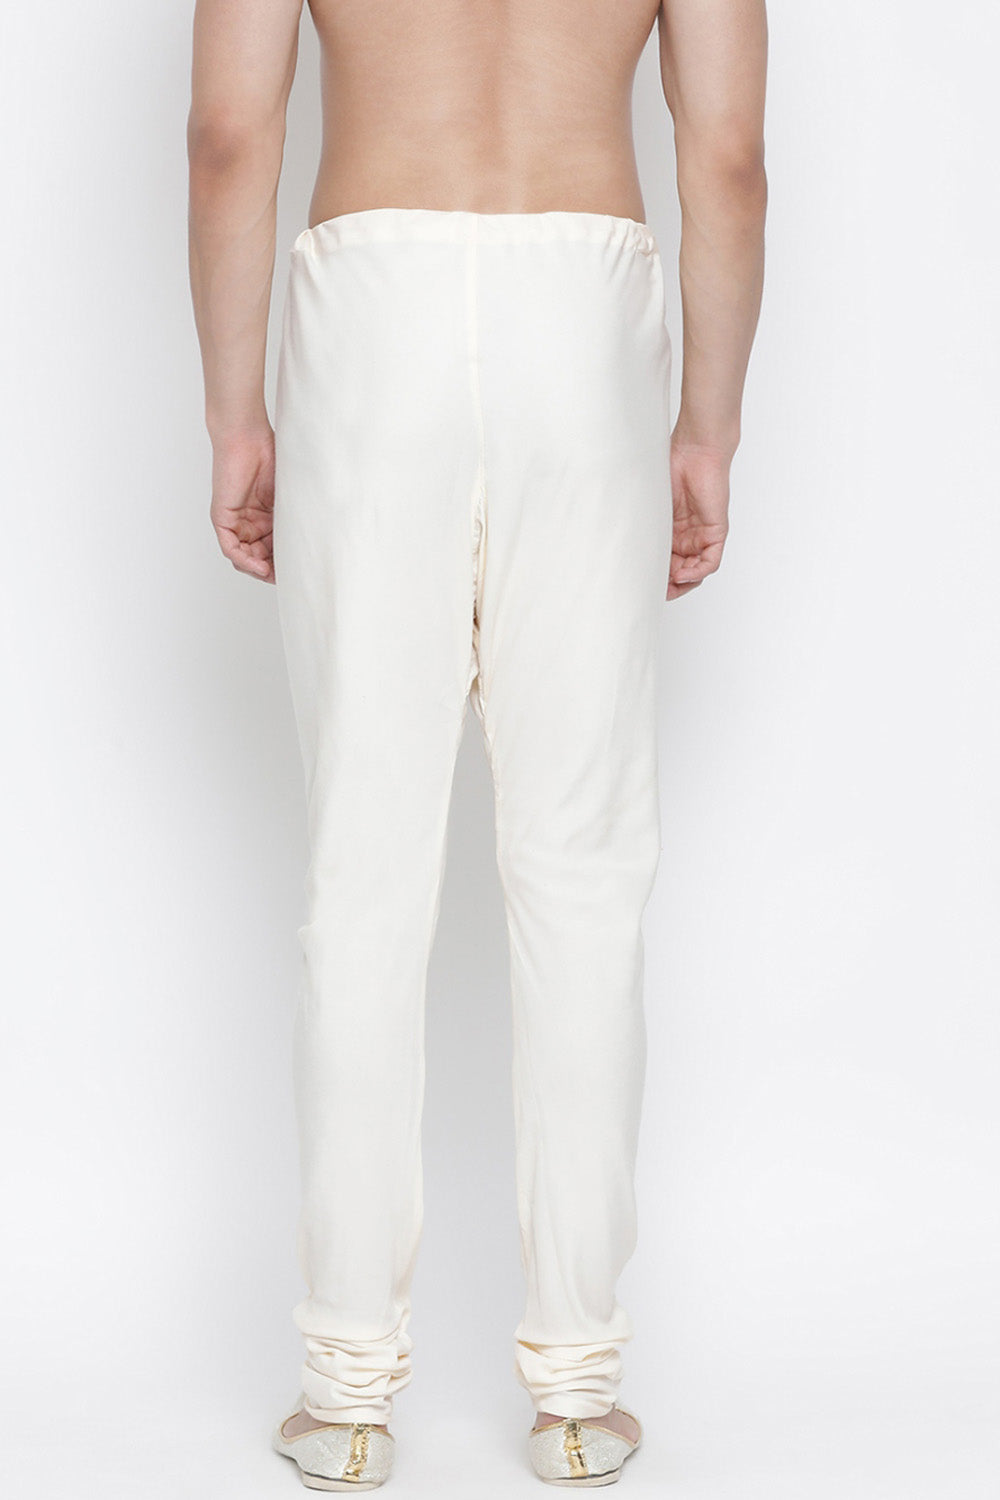 Men's Cotton Churidar Pyjama in Off White